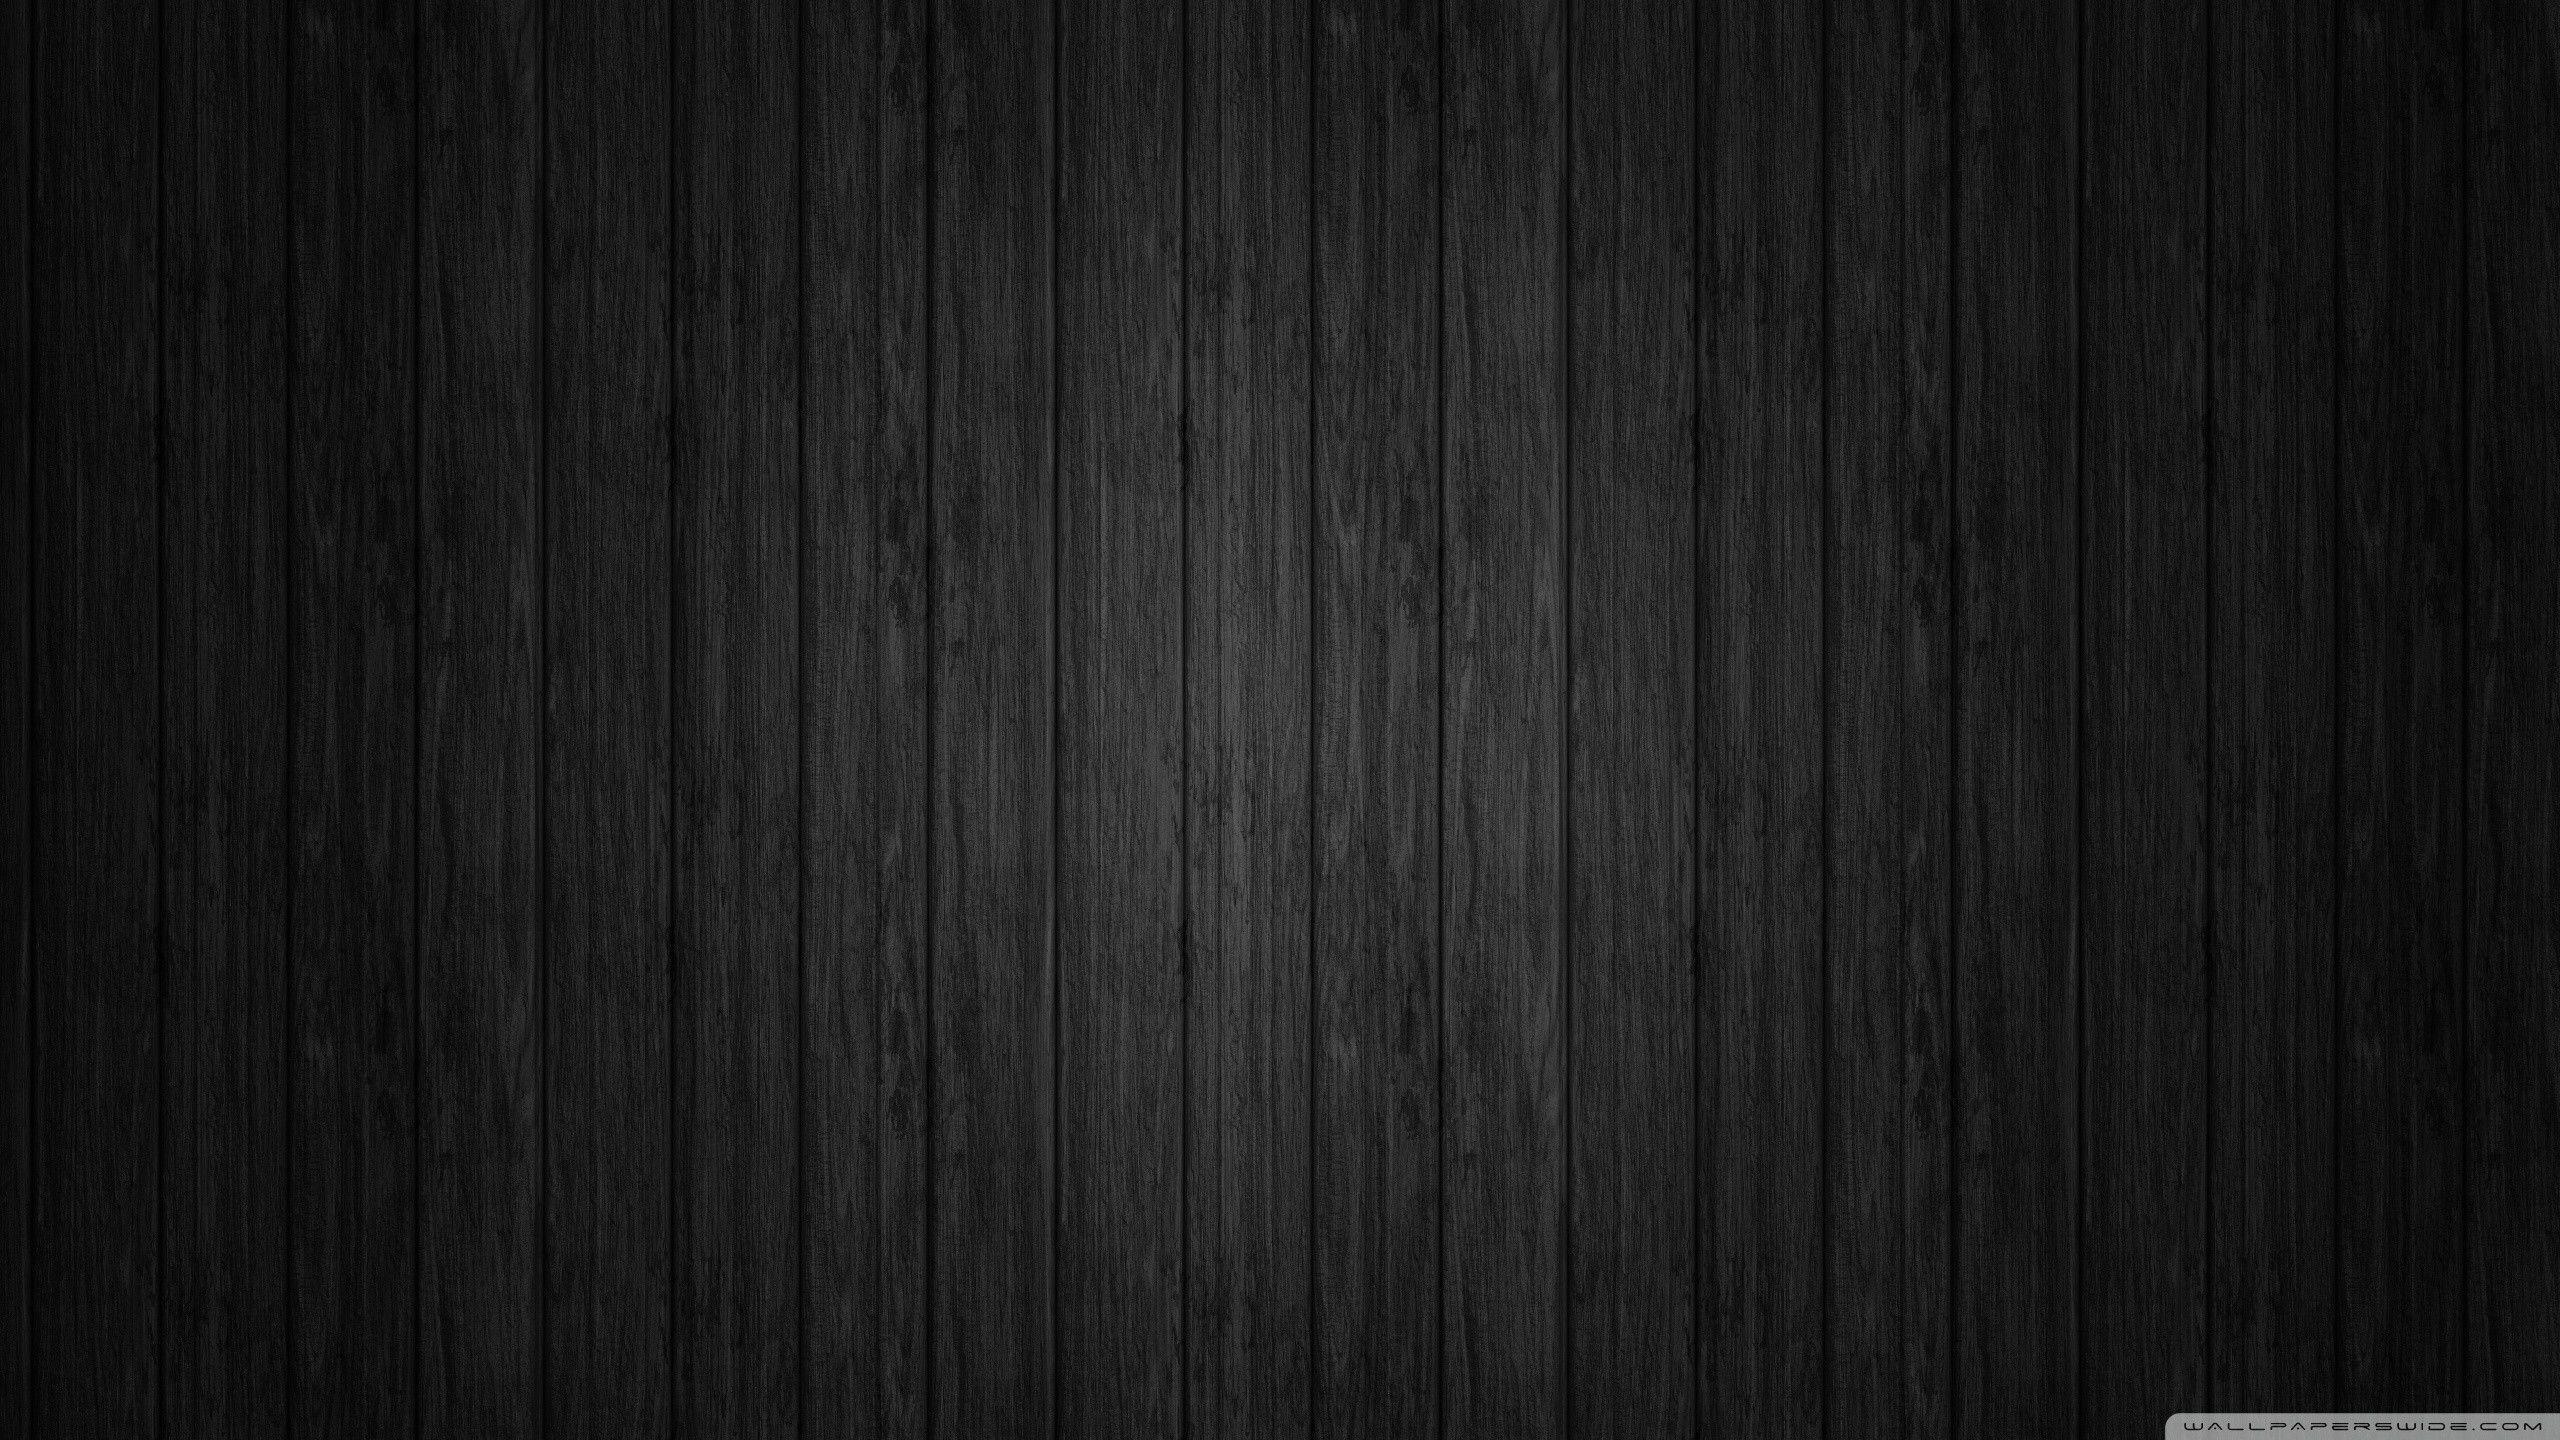 Black_background_wood Wallpaper 2560×1440 Black_background_wood